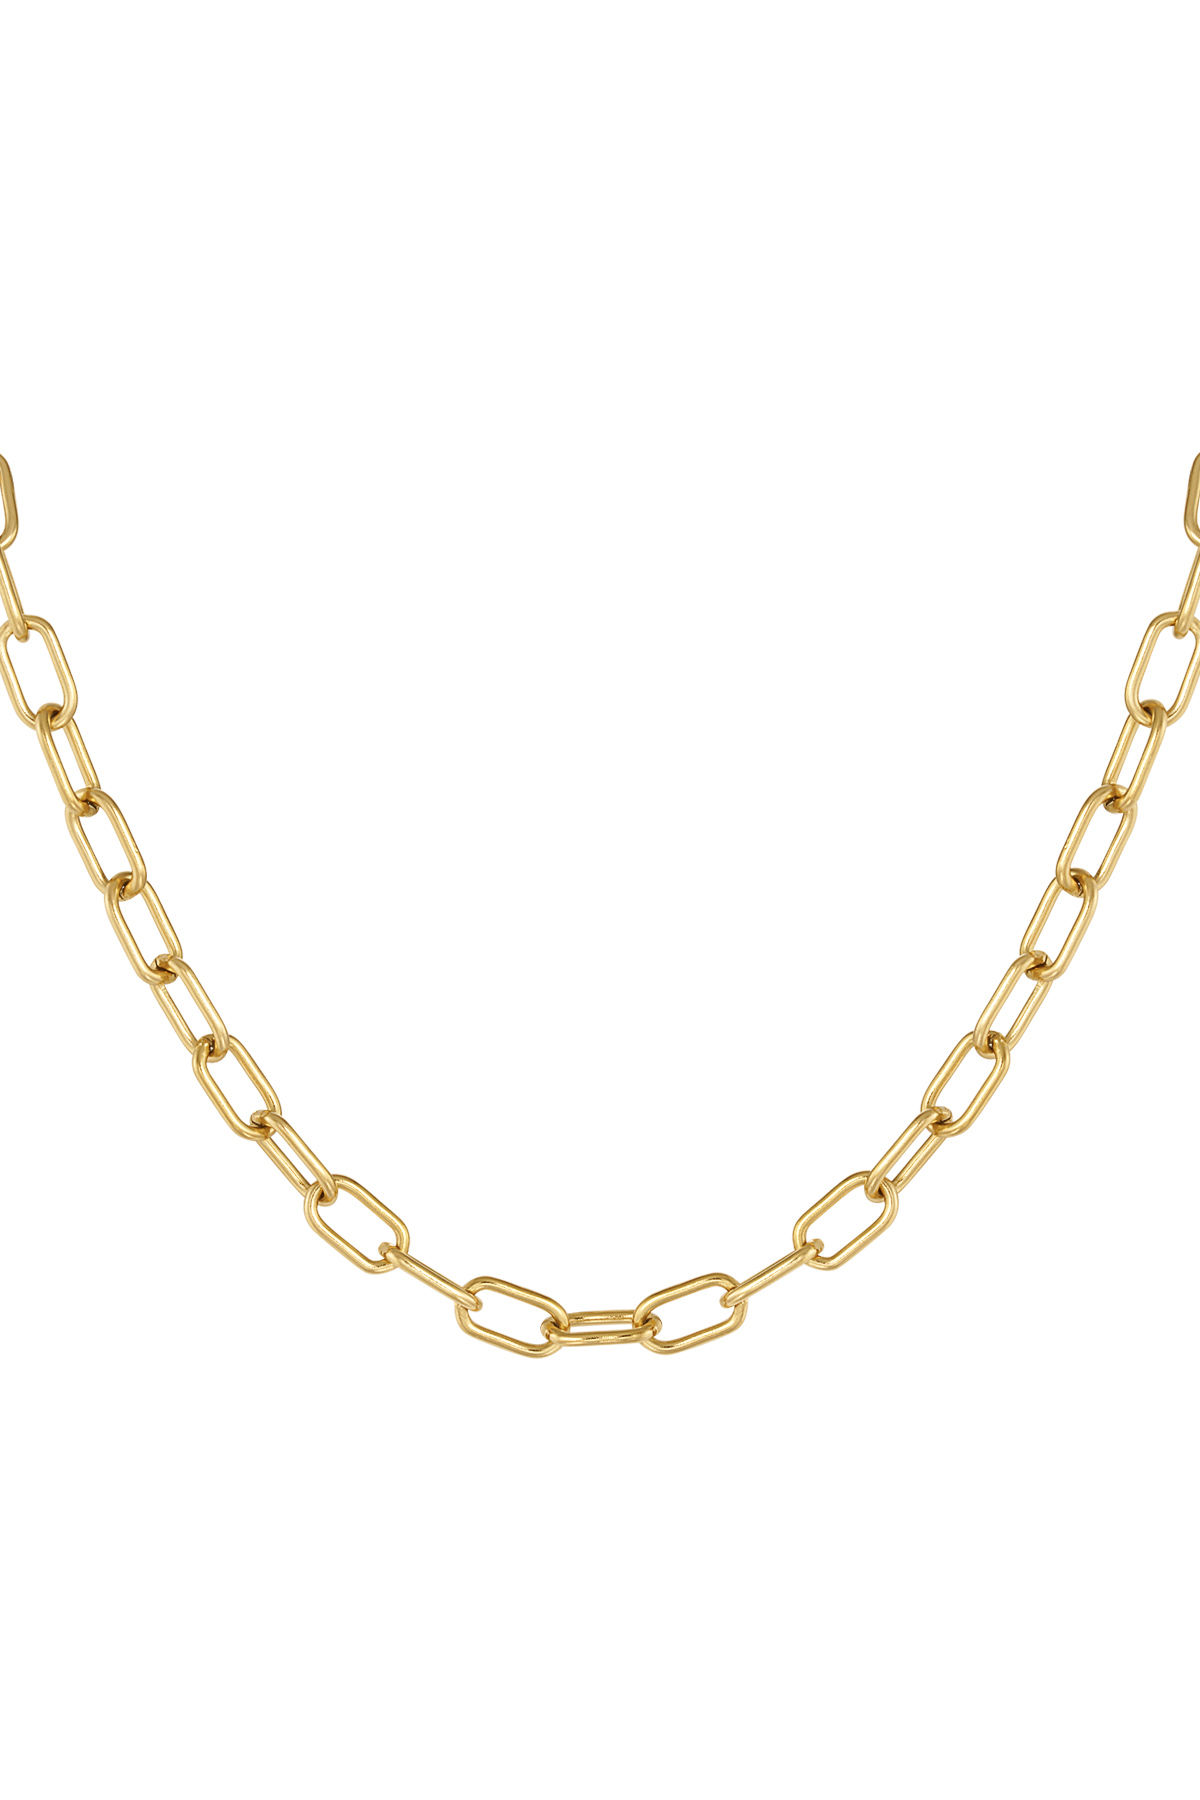 Link chain basic - gold h5 